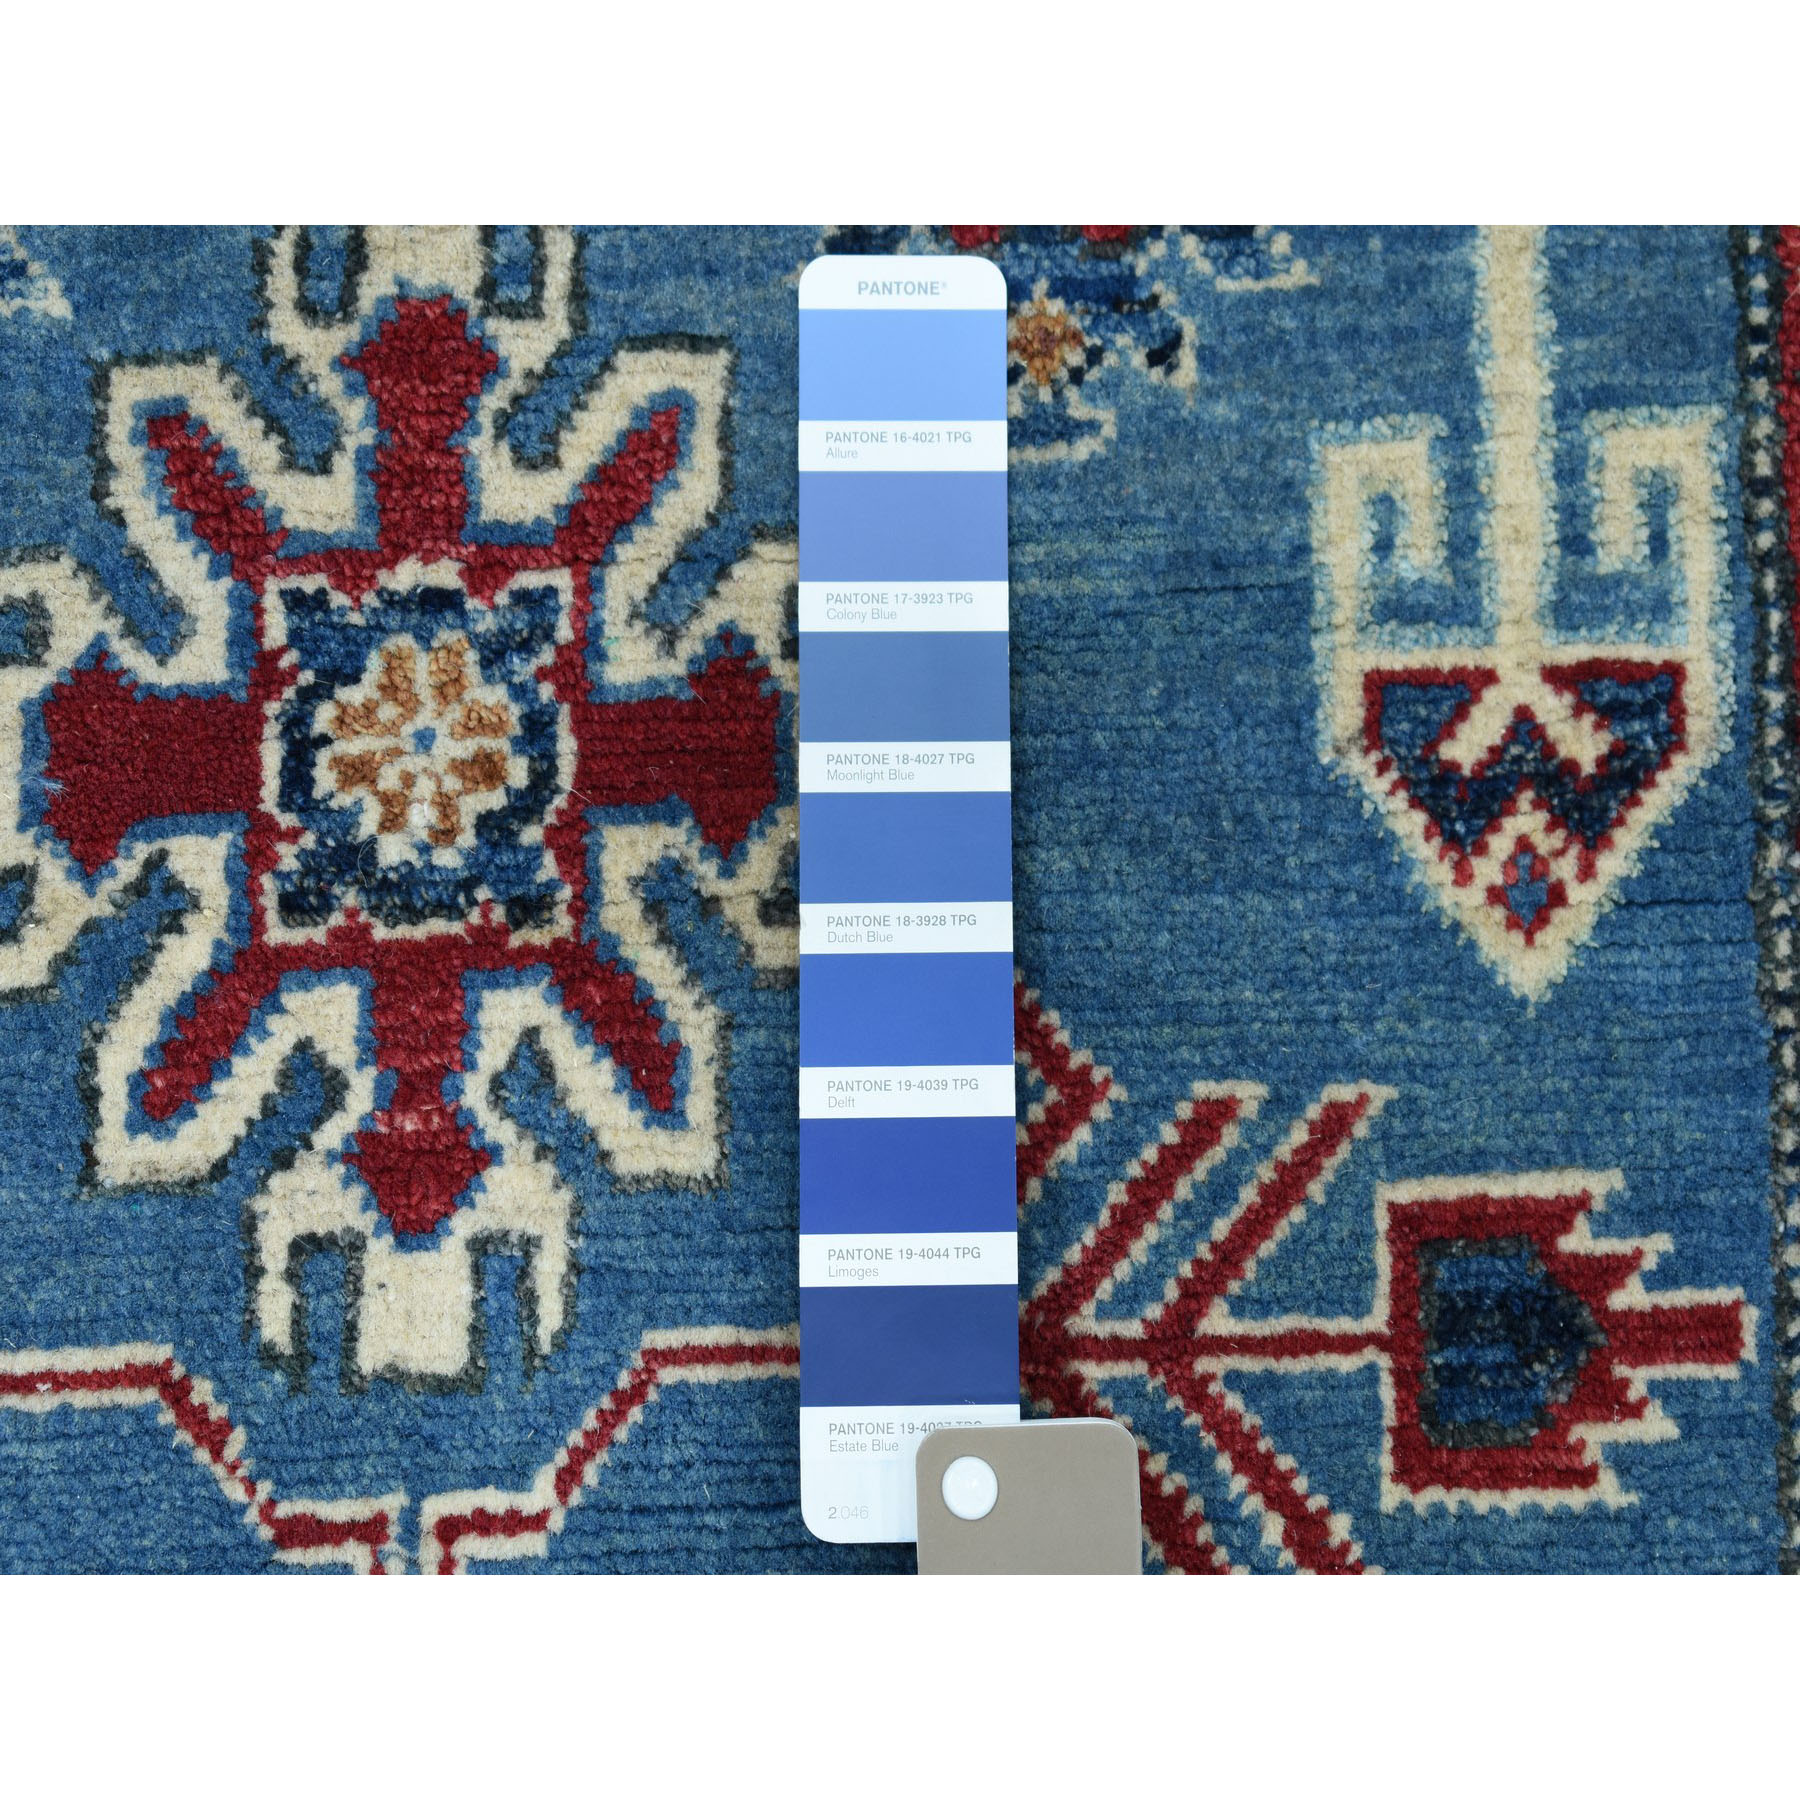 3-2 x4-10  Blue Geometric Design Kazak Pure Wool Hand-Knotted Oriental Rug 